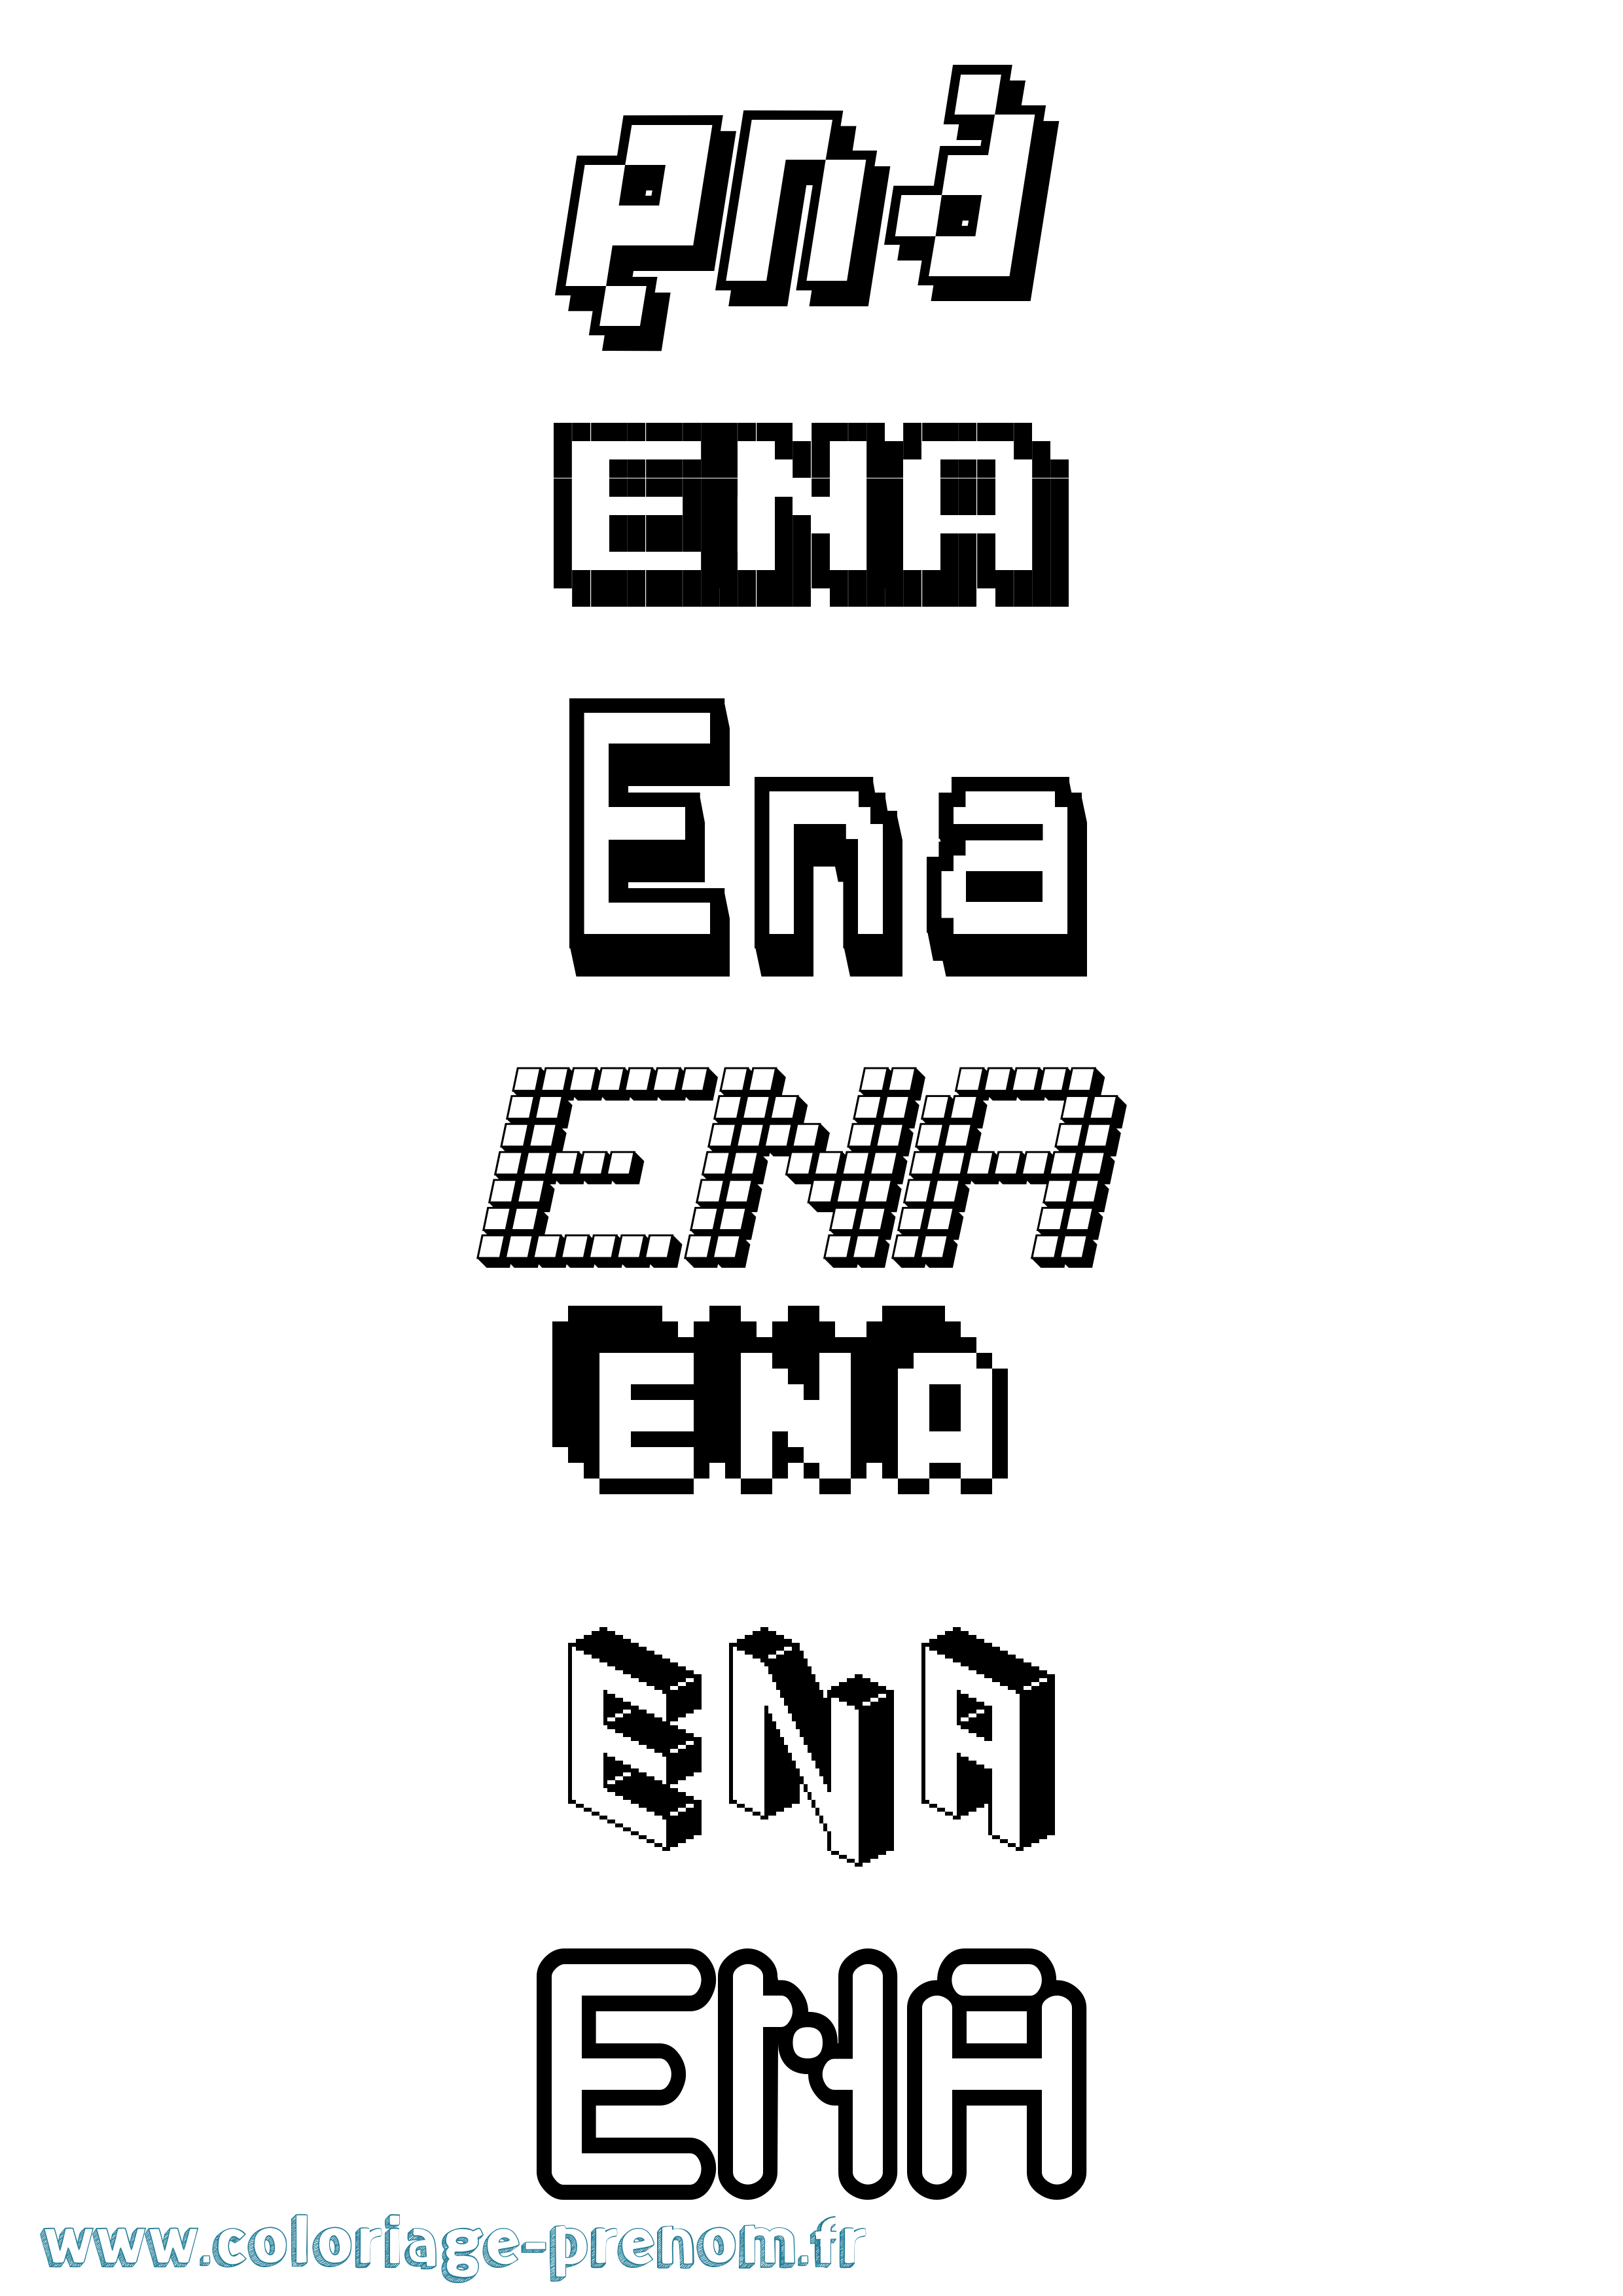 Coloriage prénom Ena Pixel